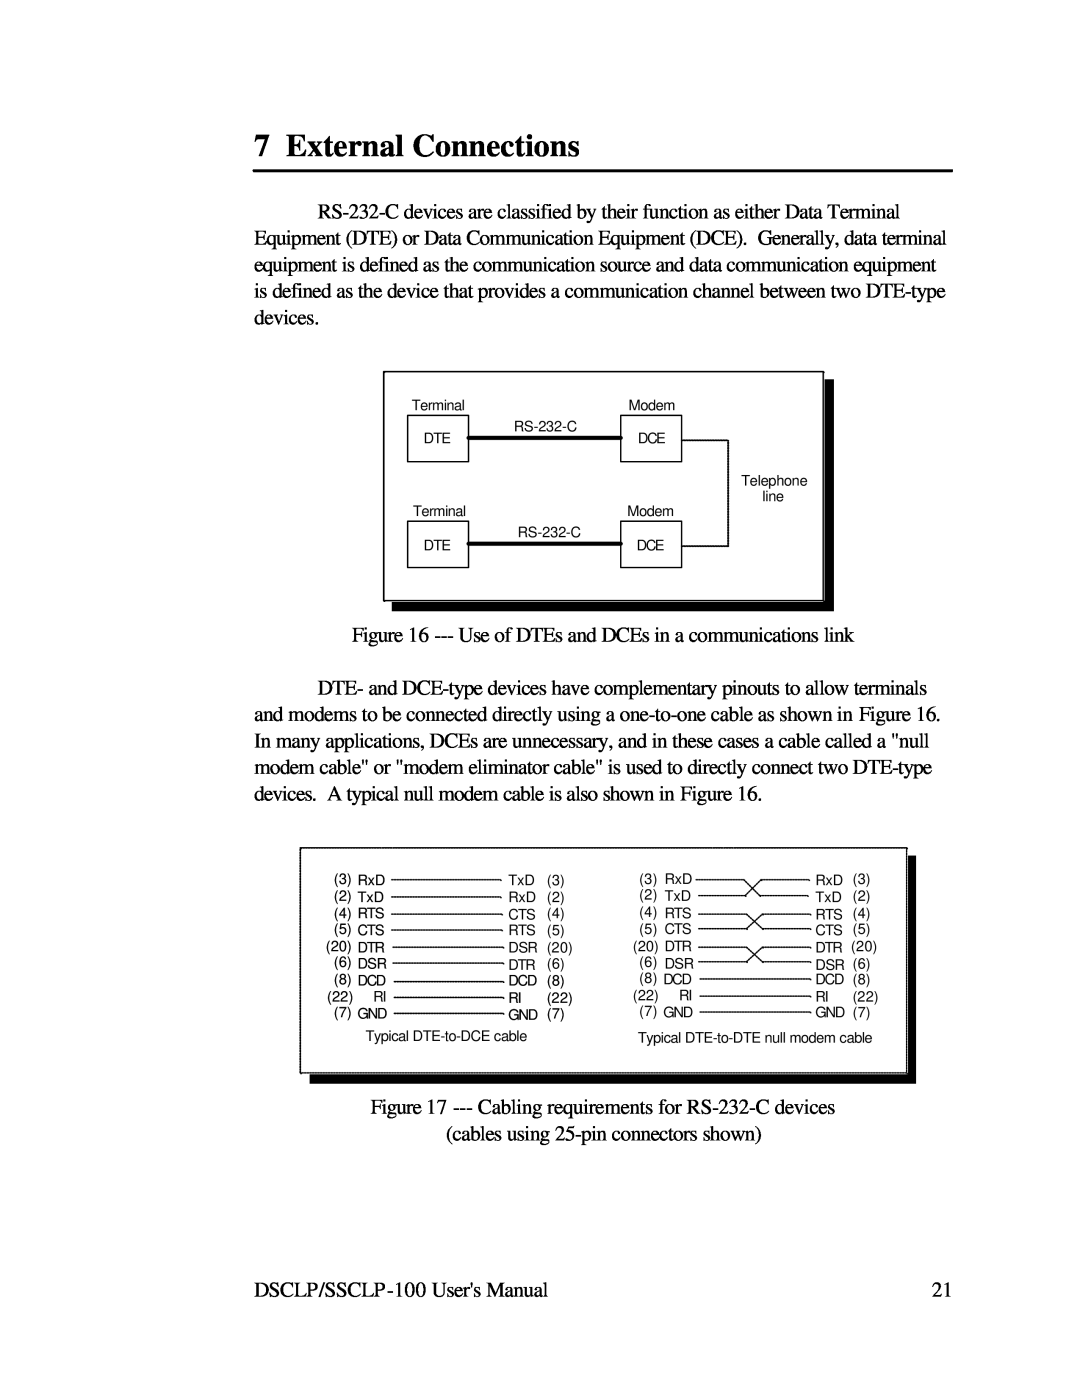 Quatech DSCLP-100 user manual External Connections 